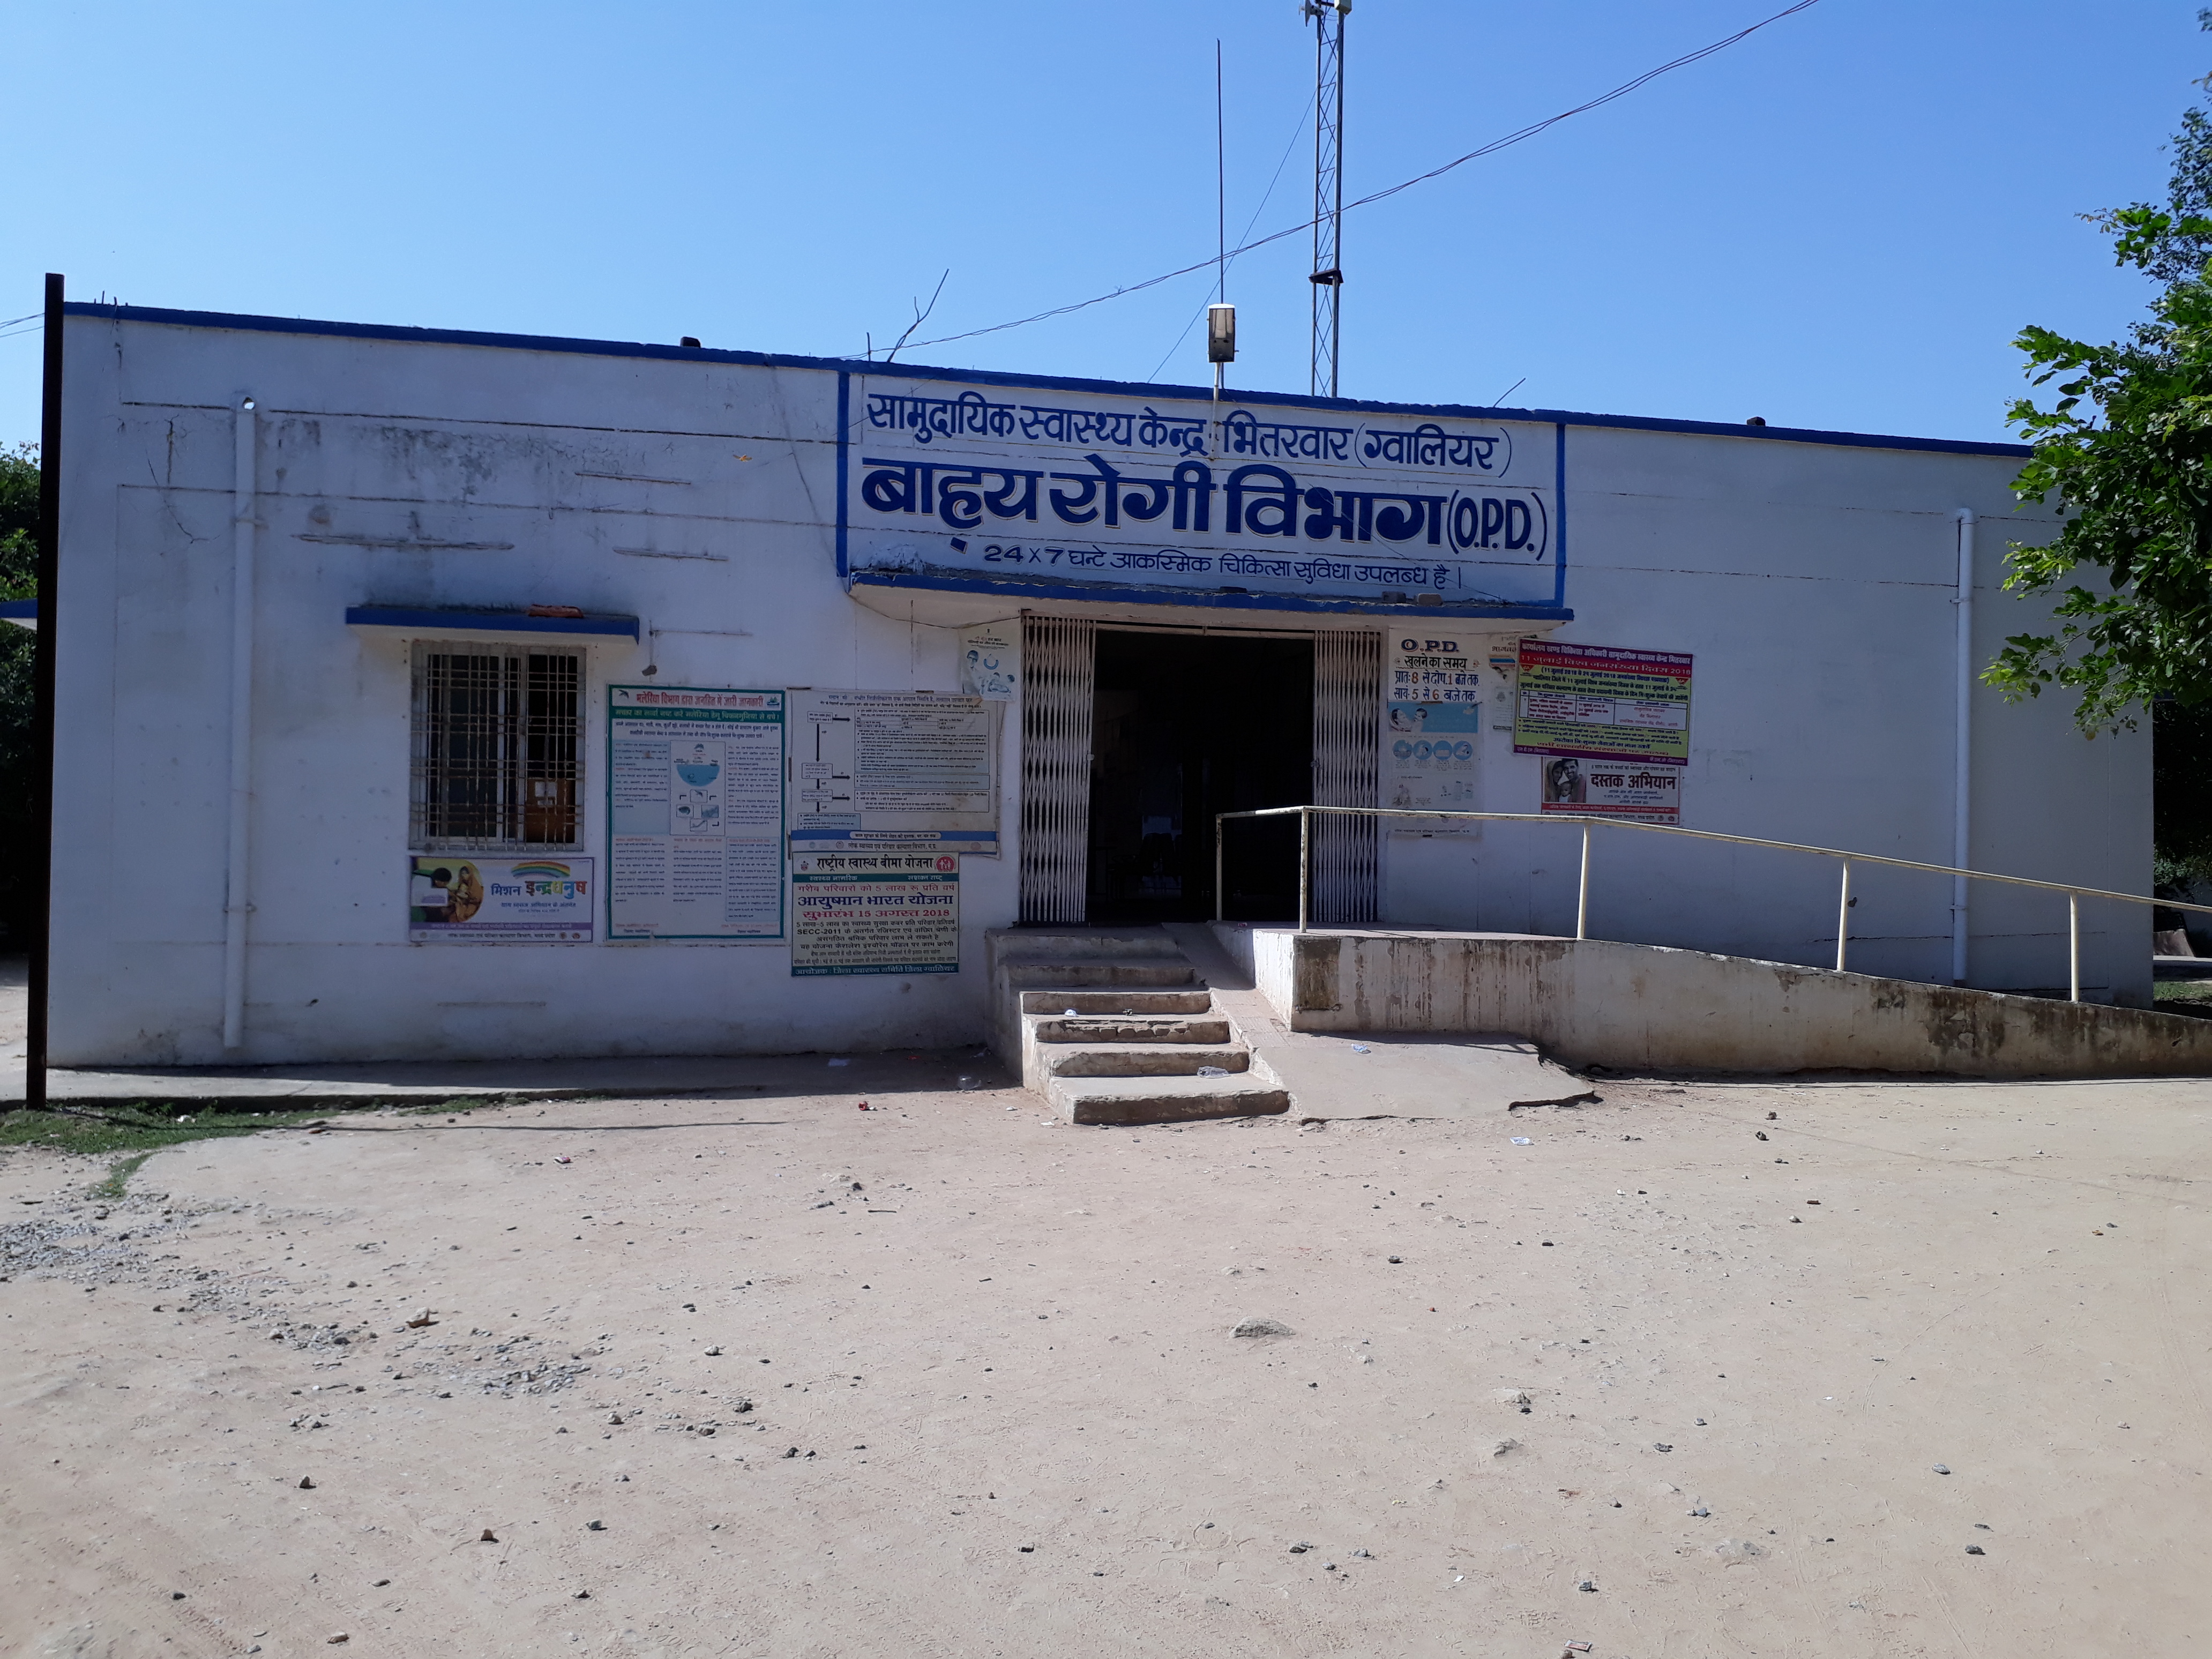 Injured in community health center, news in hindi, mp news, dabra news